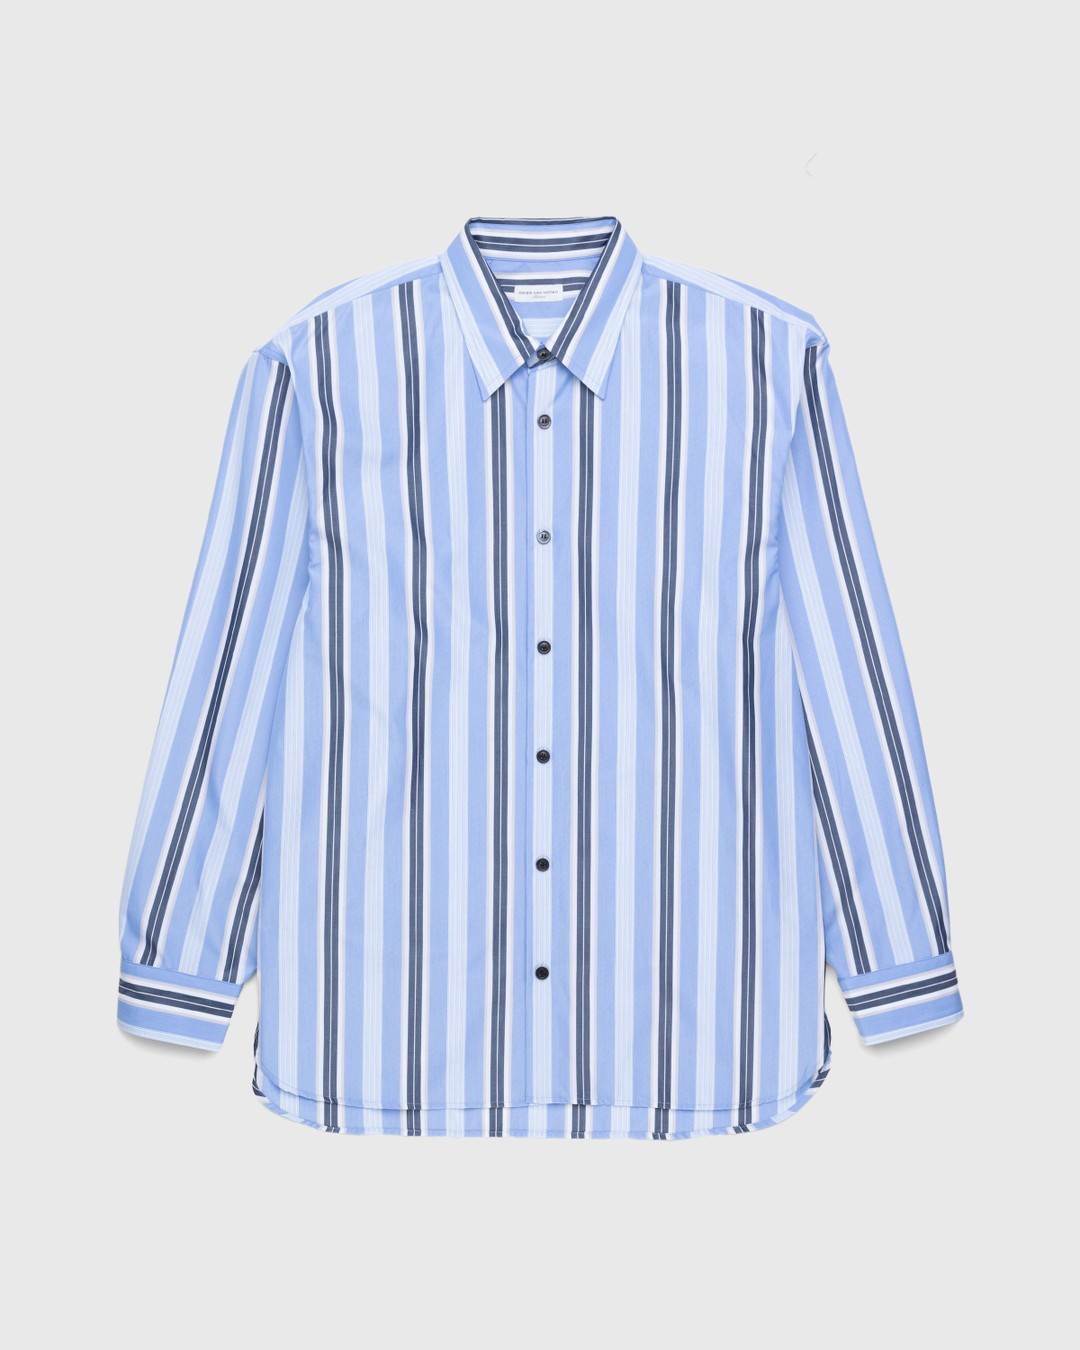 Dries van Noten – Croom Shirt Light Blue - Shirts - Blue - Image 1